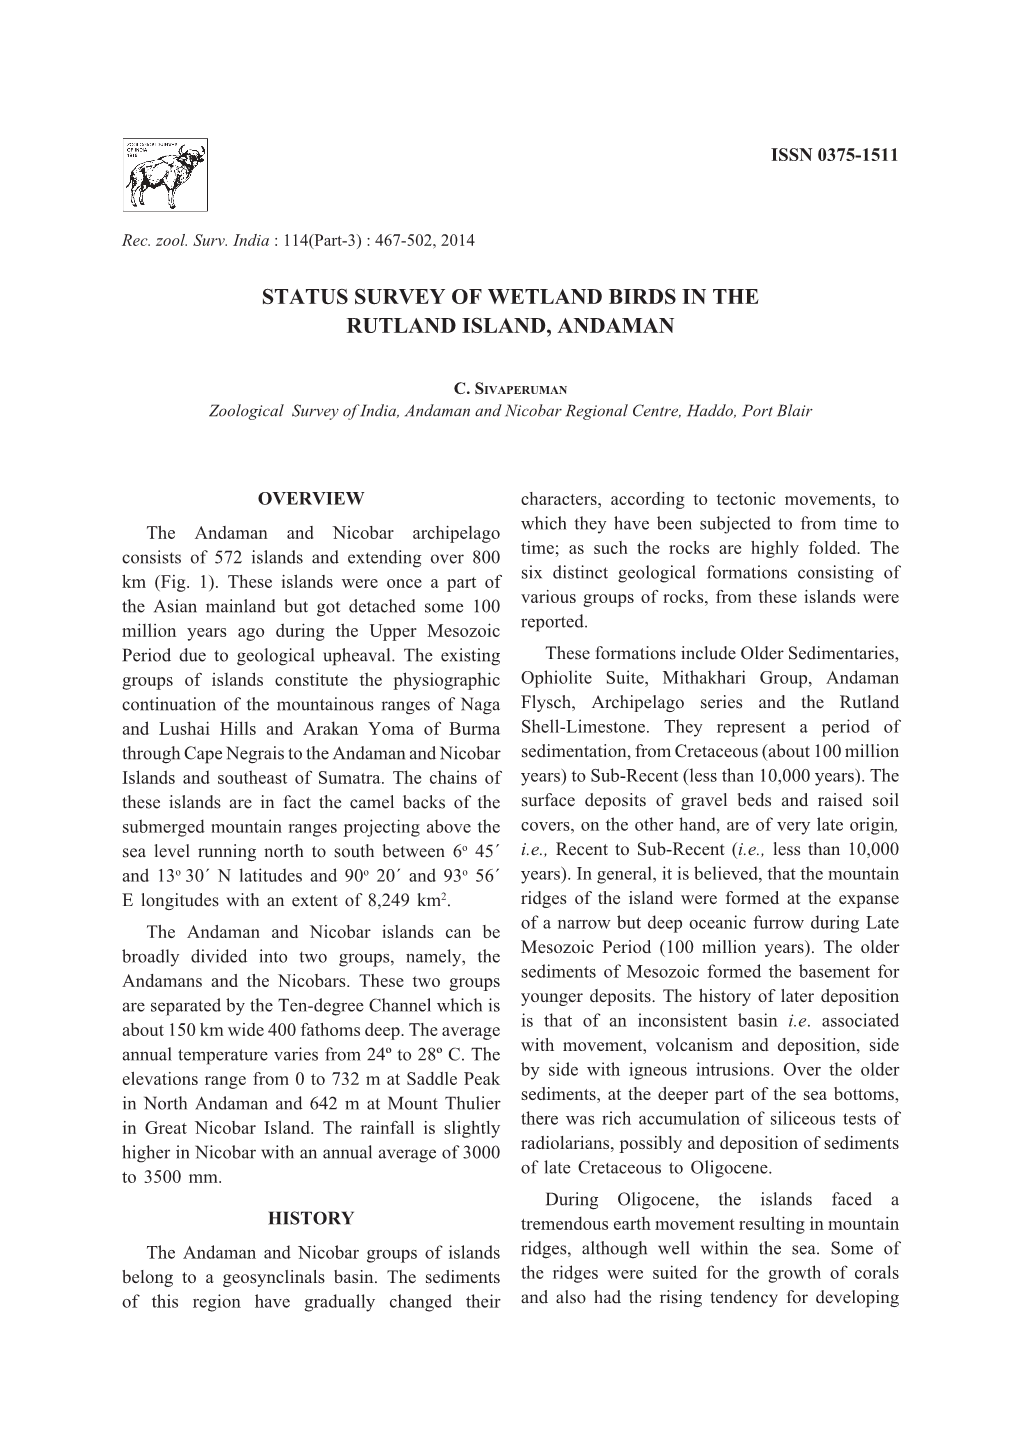 Status Survey of Wetland Birds in the Rutland Island, Andaman ISSN 0375-1511467